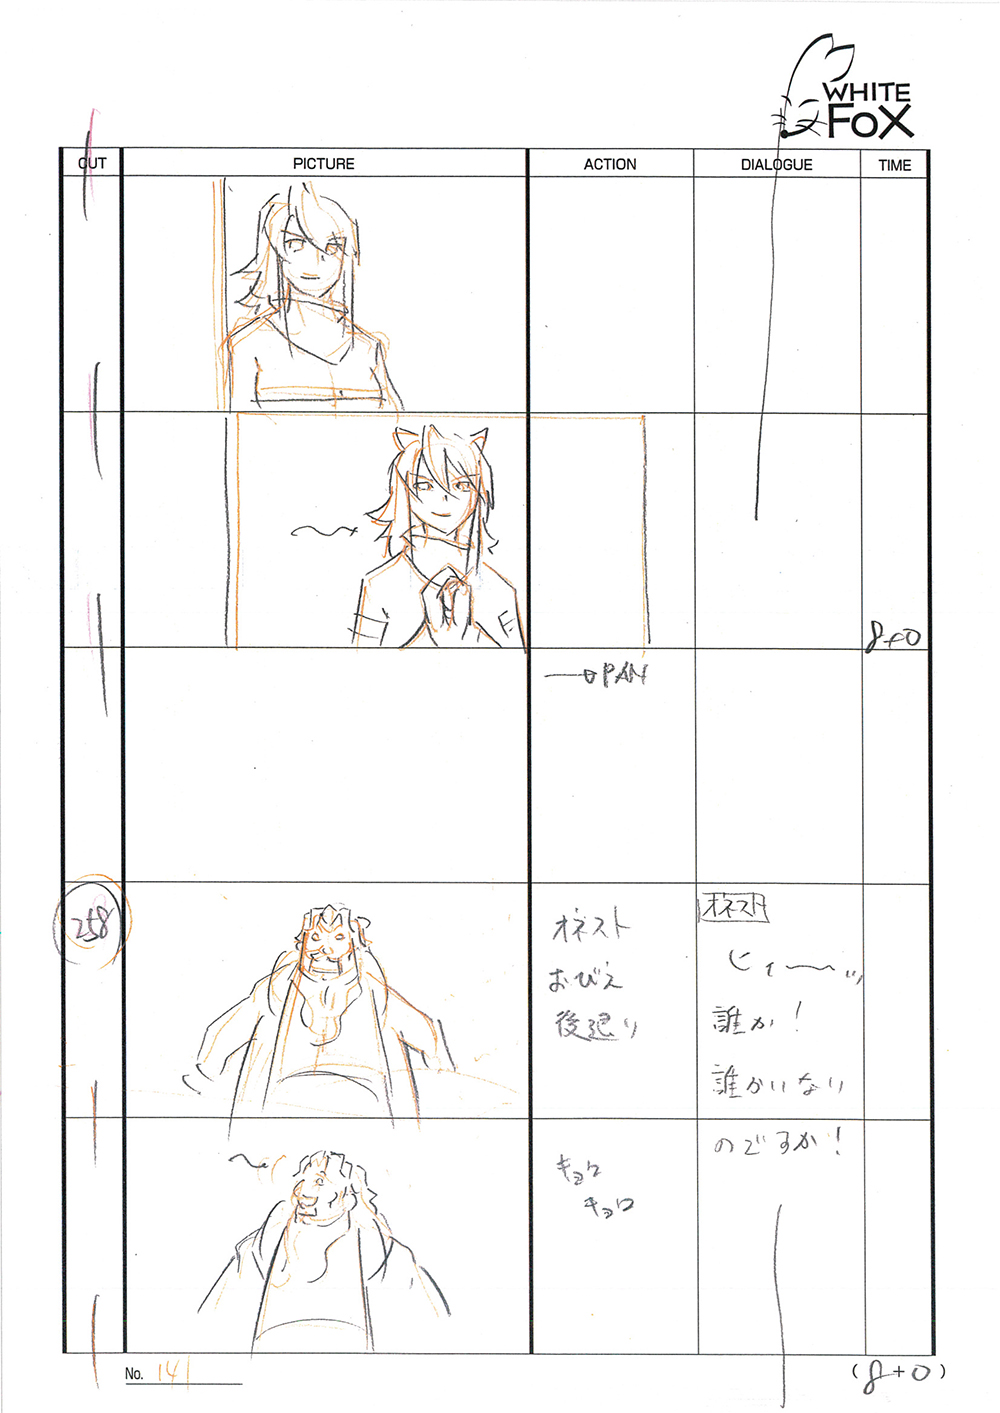 Akame ga Kill Episode 24 Storyboard Leak 146